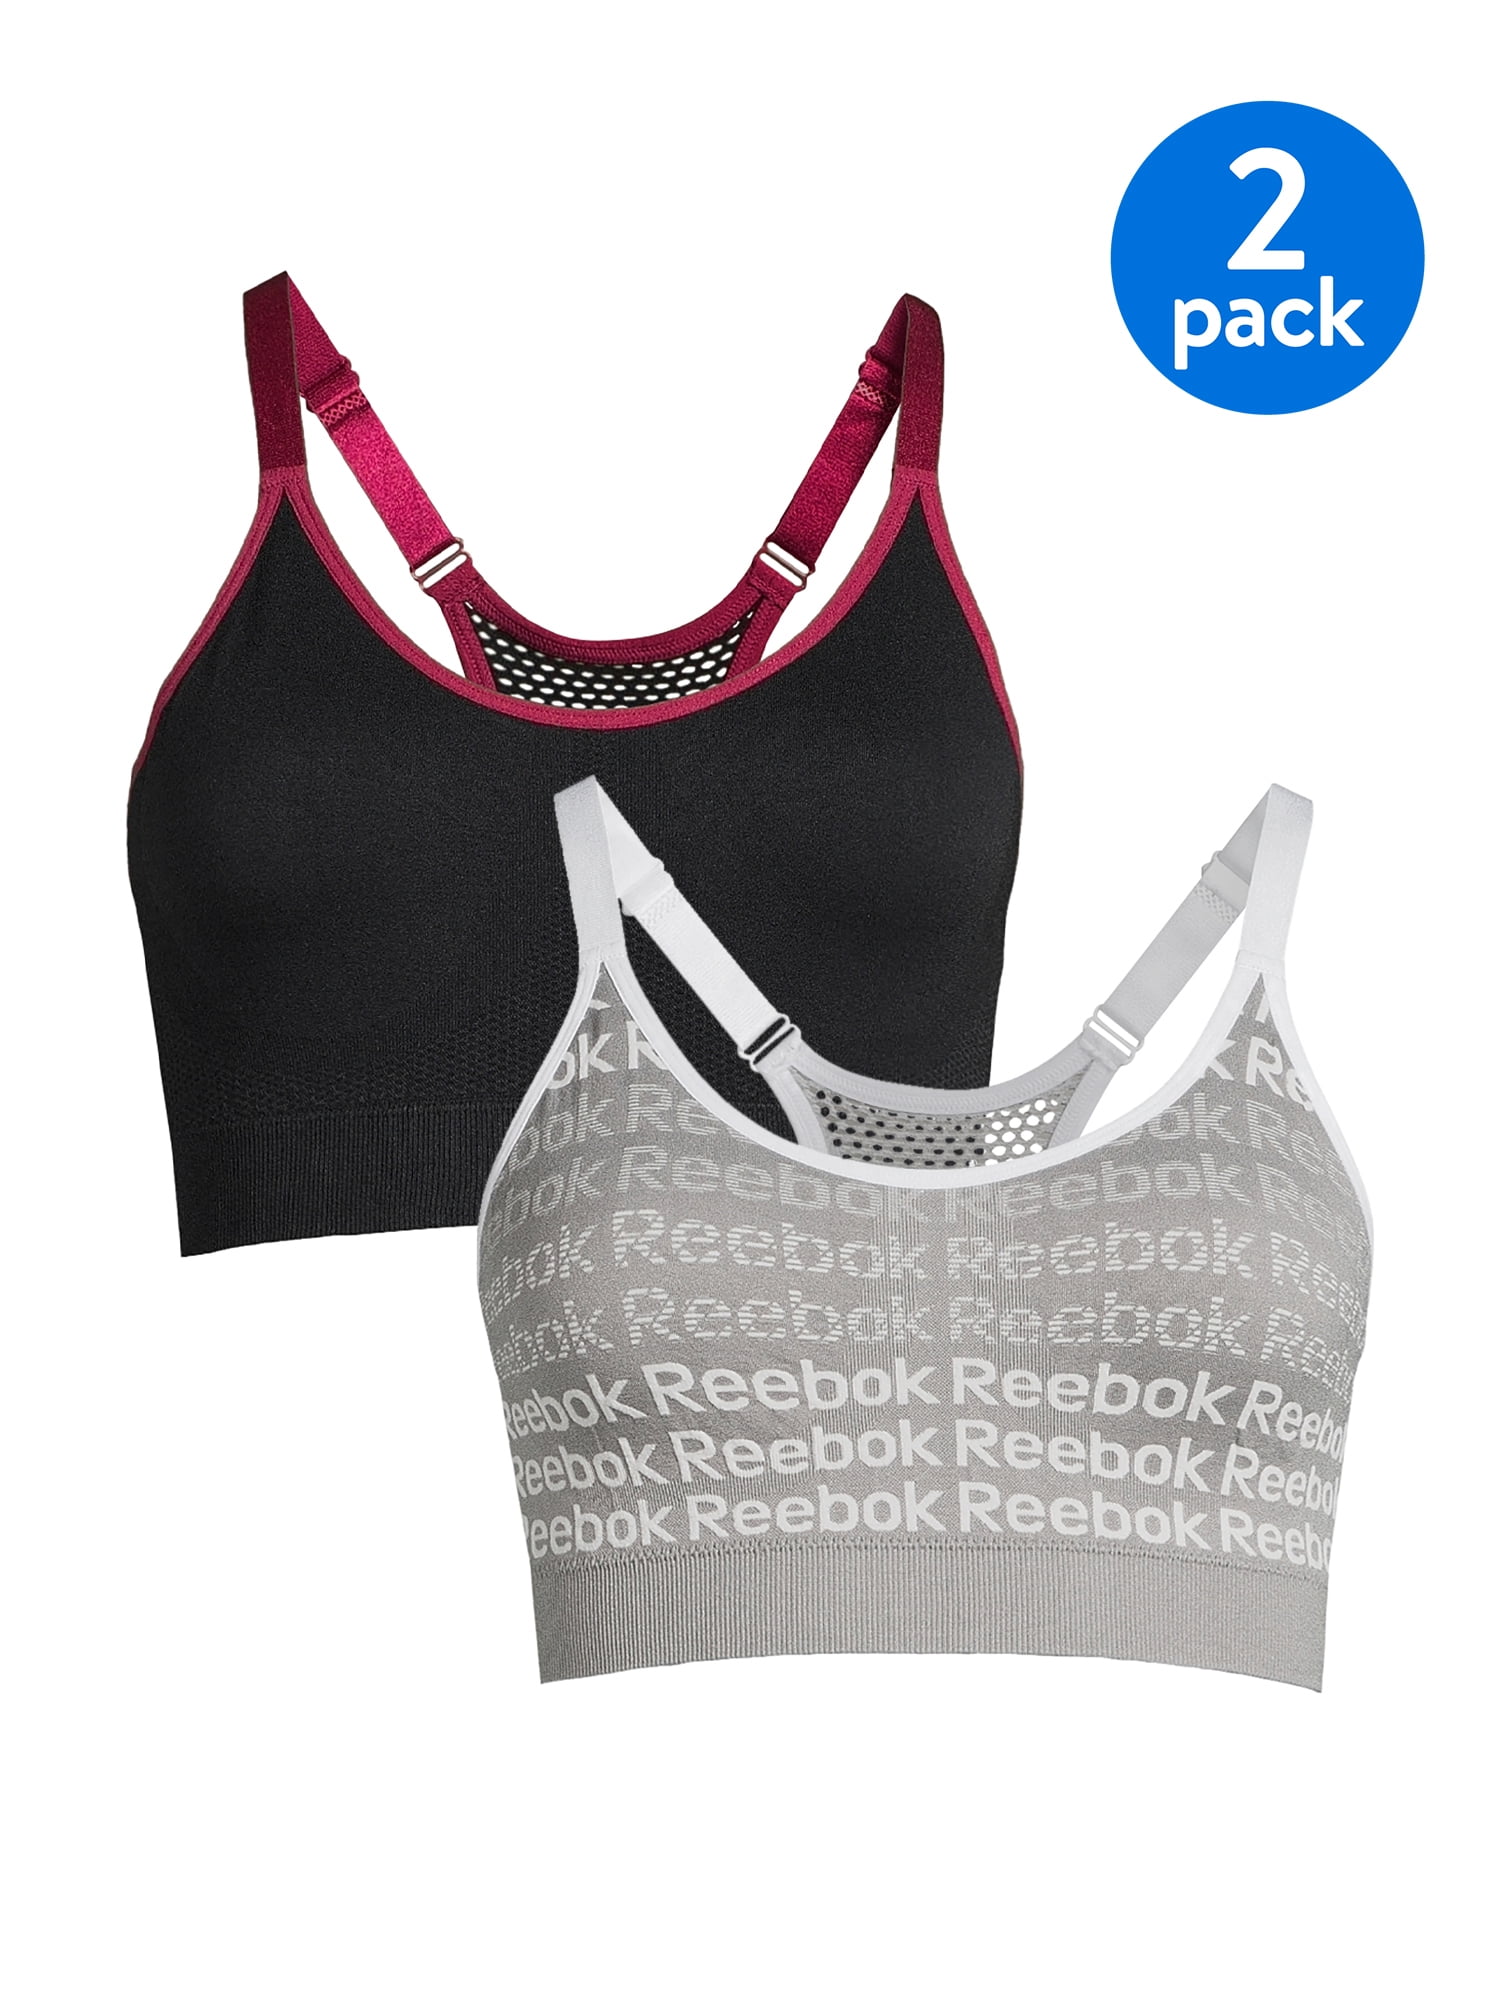 symaskine Let Vred Reebok Women's Sports Bra, 2 Pack - Walmart.com